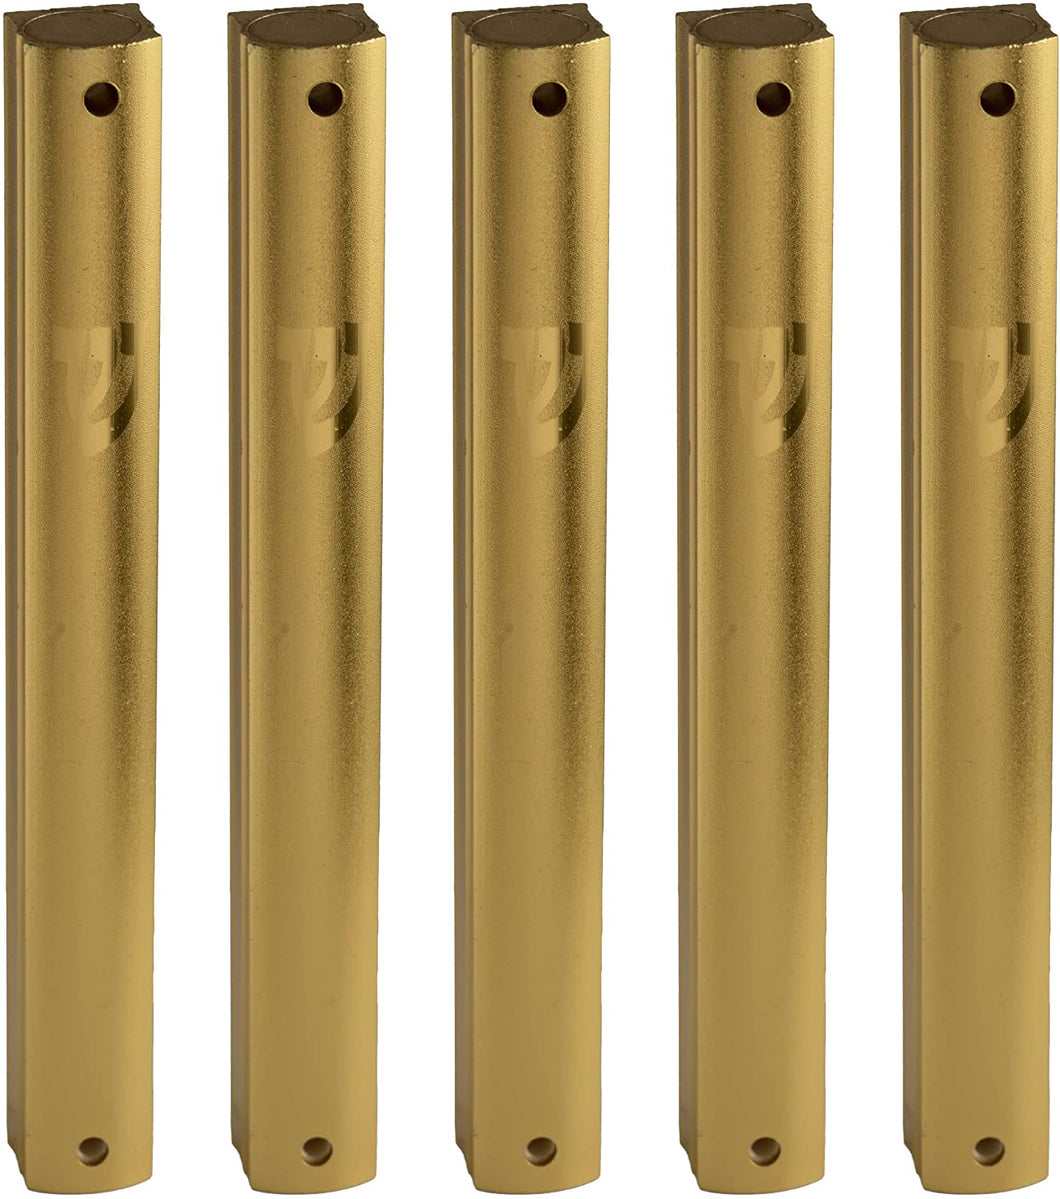 Aluminum MEZUZAH CASE  Gold with Glossy Modern Shin Self Stick Waterproof Rubber Cork  Sold in unit of 5 pcs